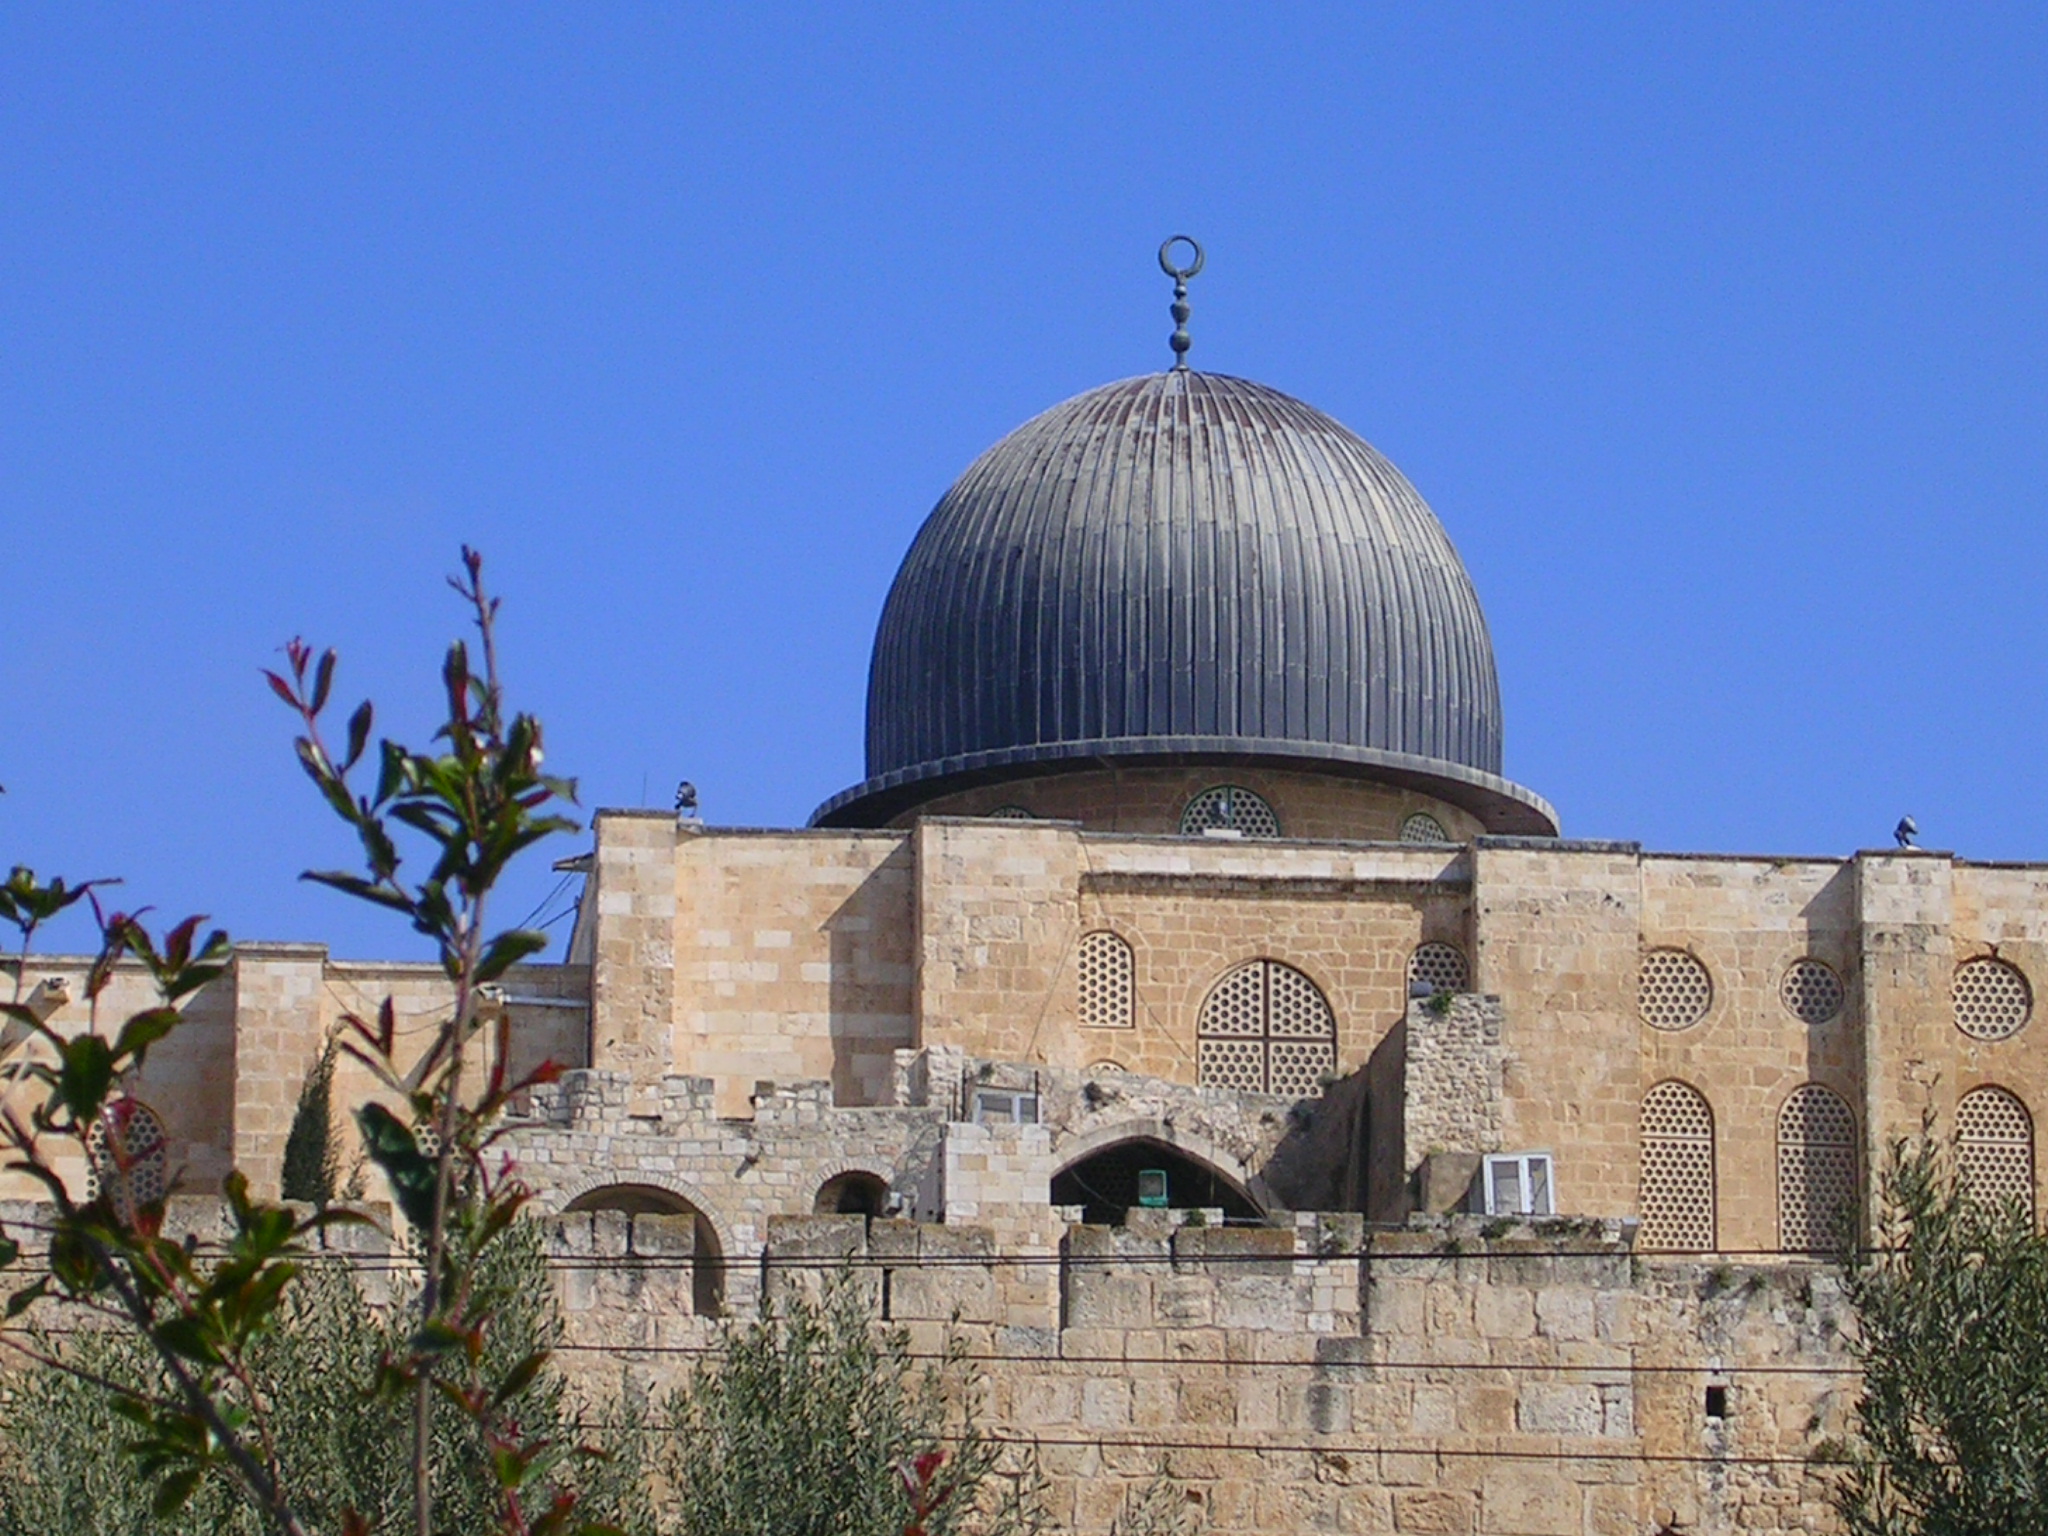 Dome of the Al-Aqsa Mosque in Jerusalem